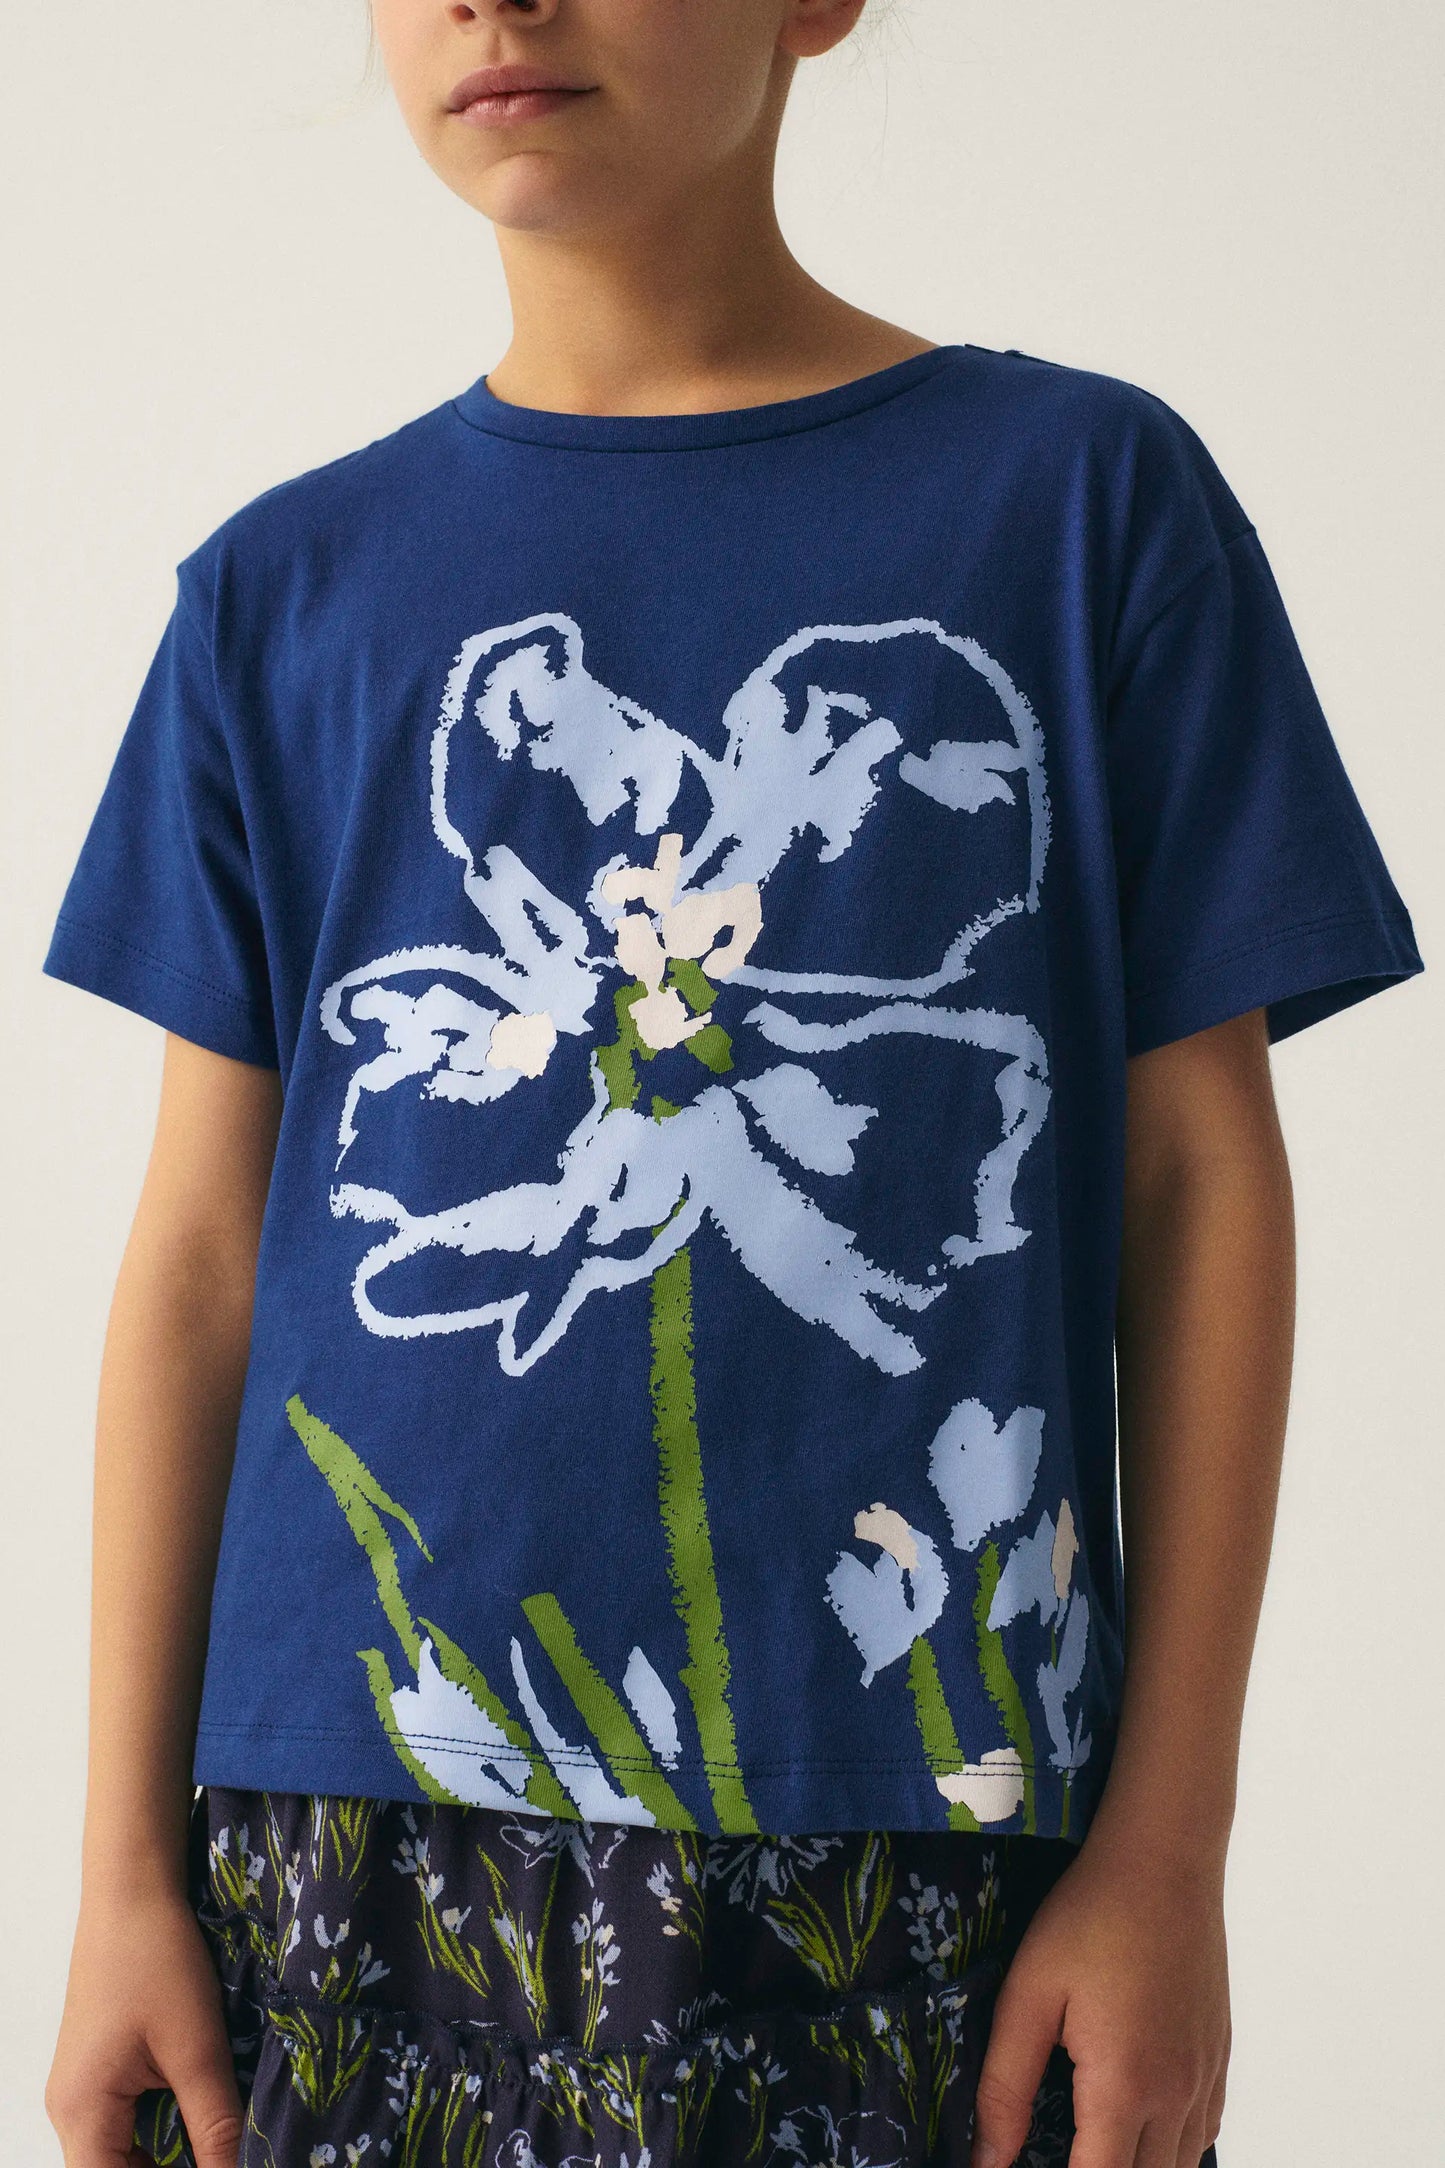 Camiseta unisex de algodón con gráfica floral azul